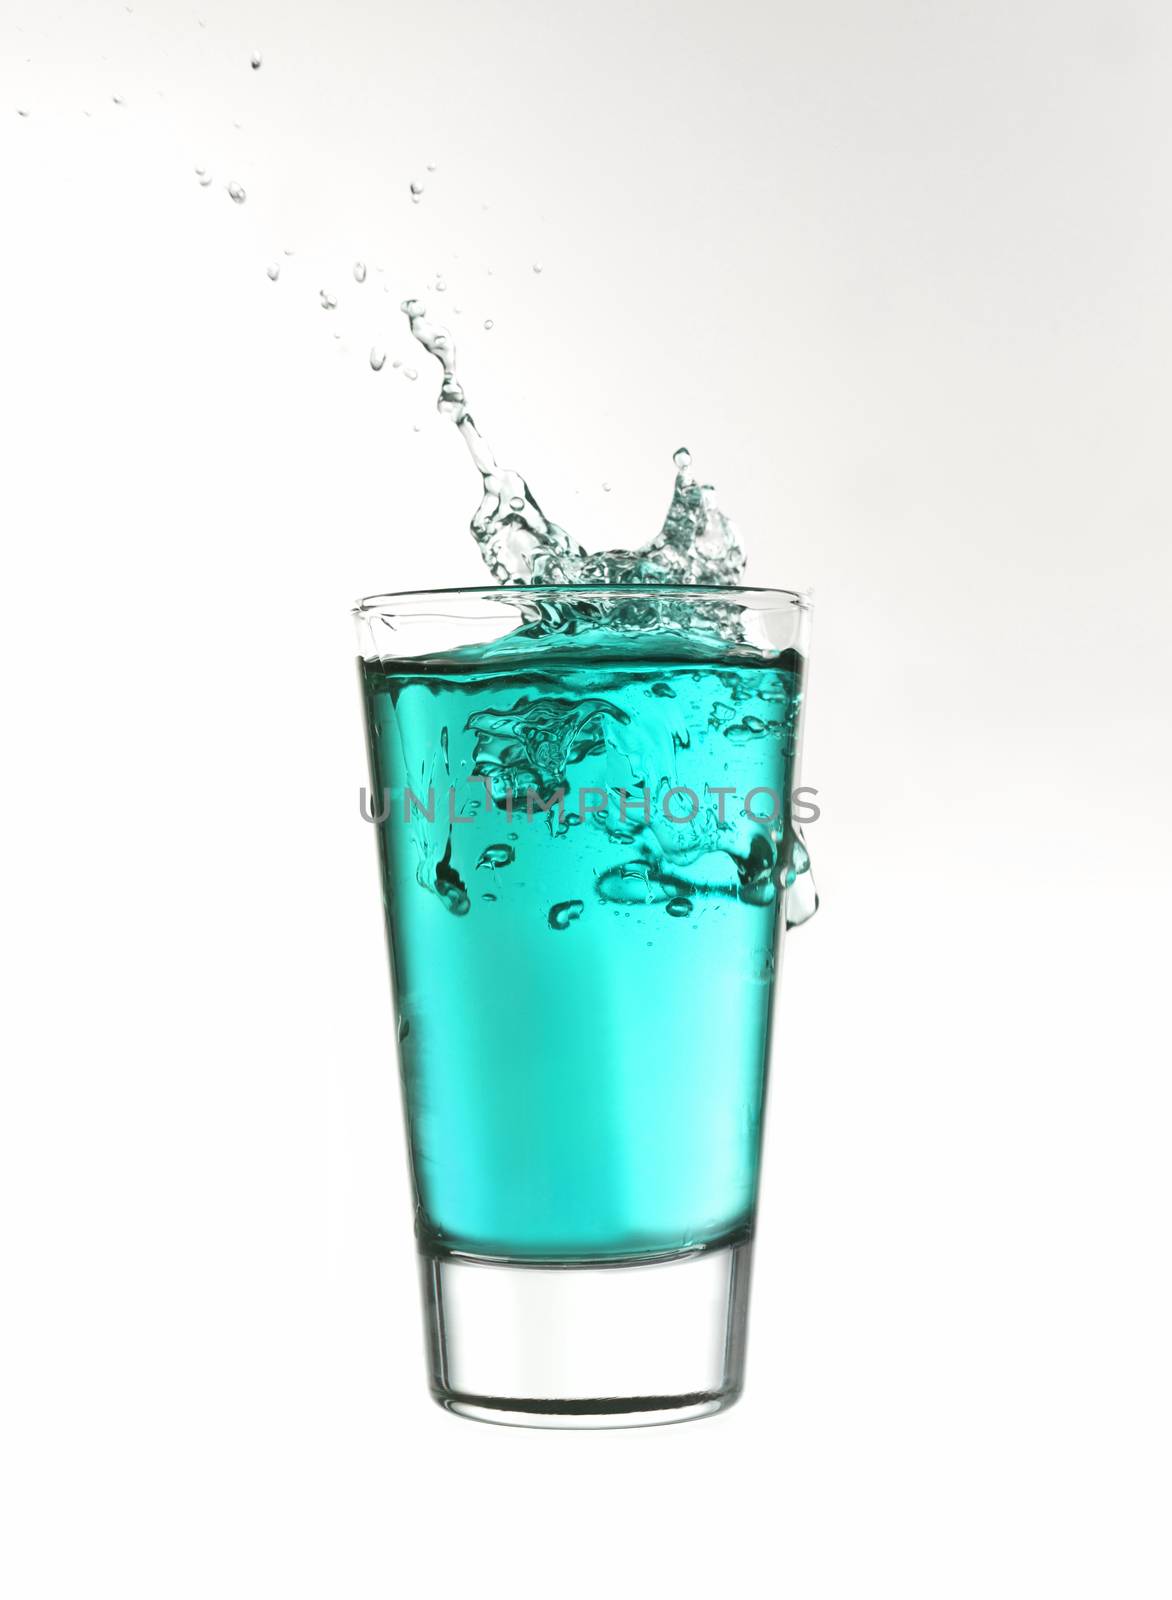 Splash in a glass of turquoise lemonade by gemenacom